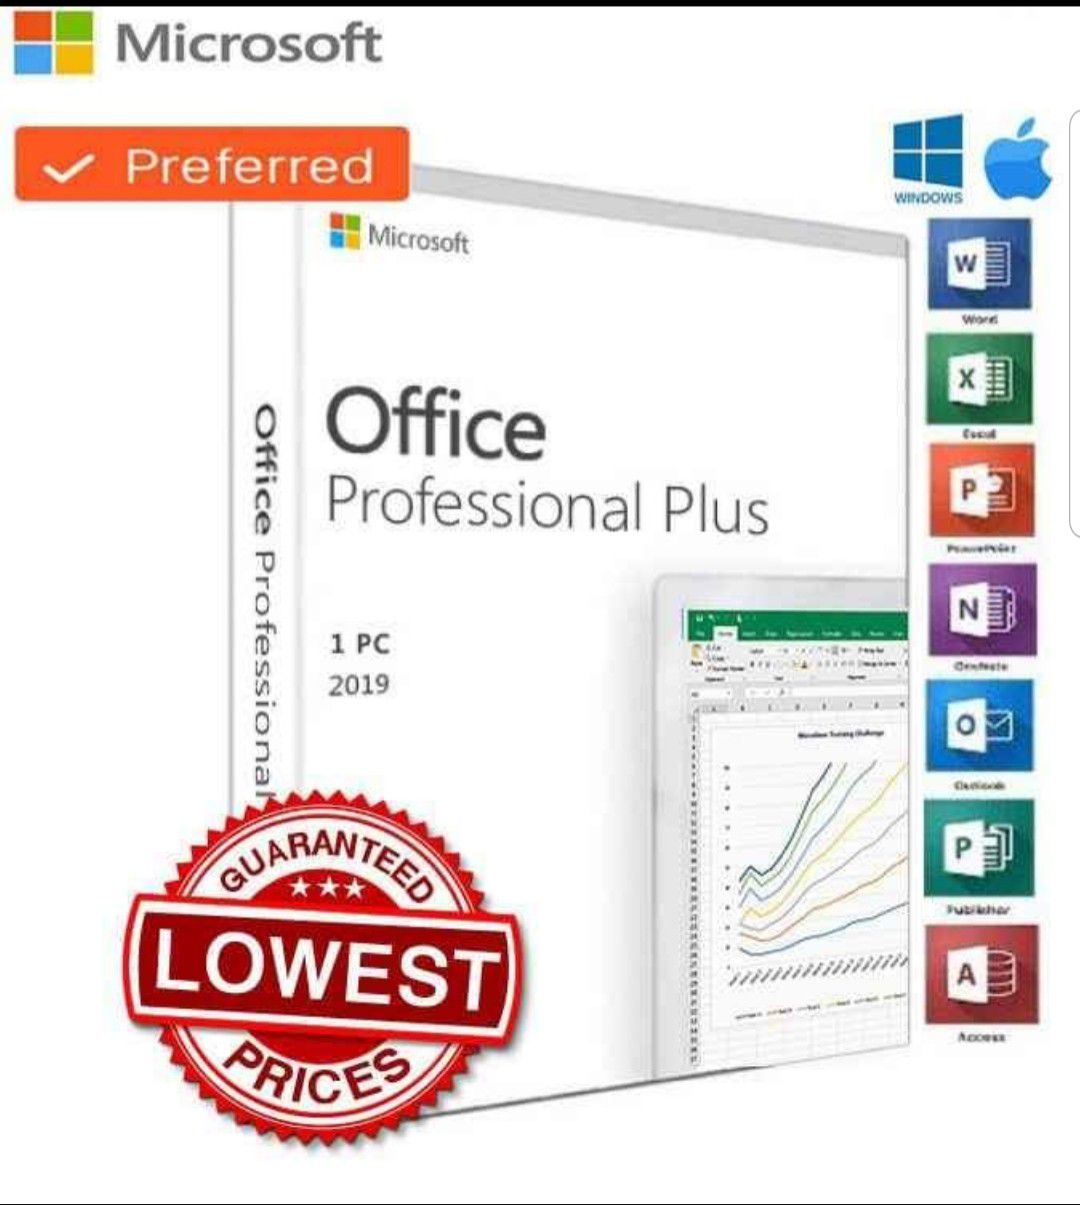 Microsoft office pro plus 2019...installing